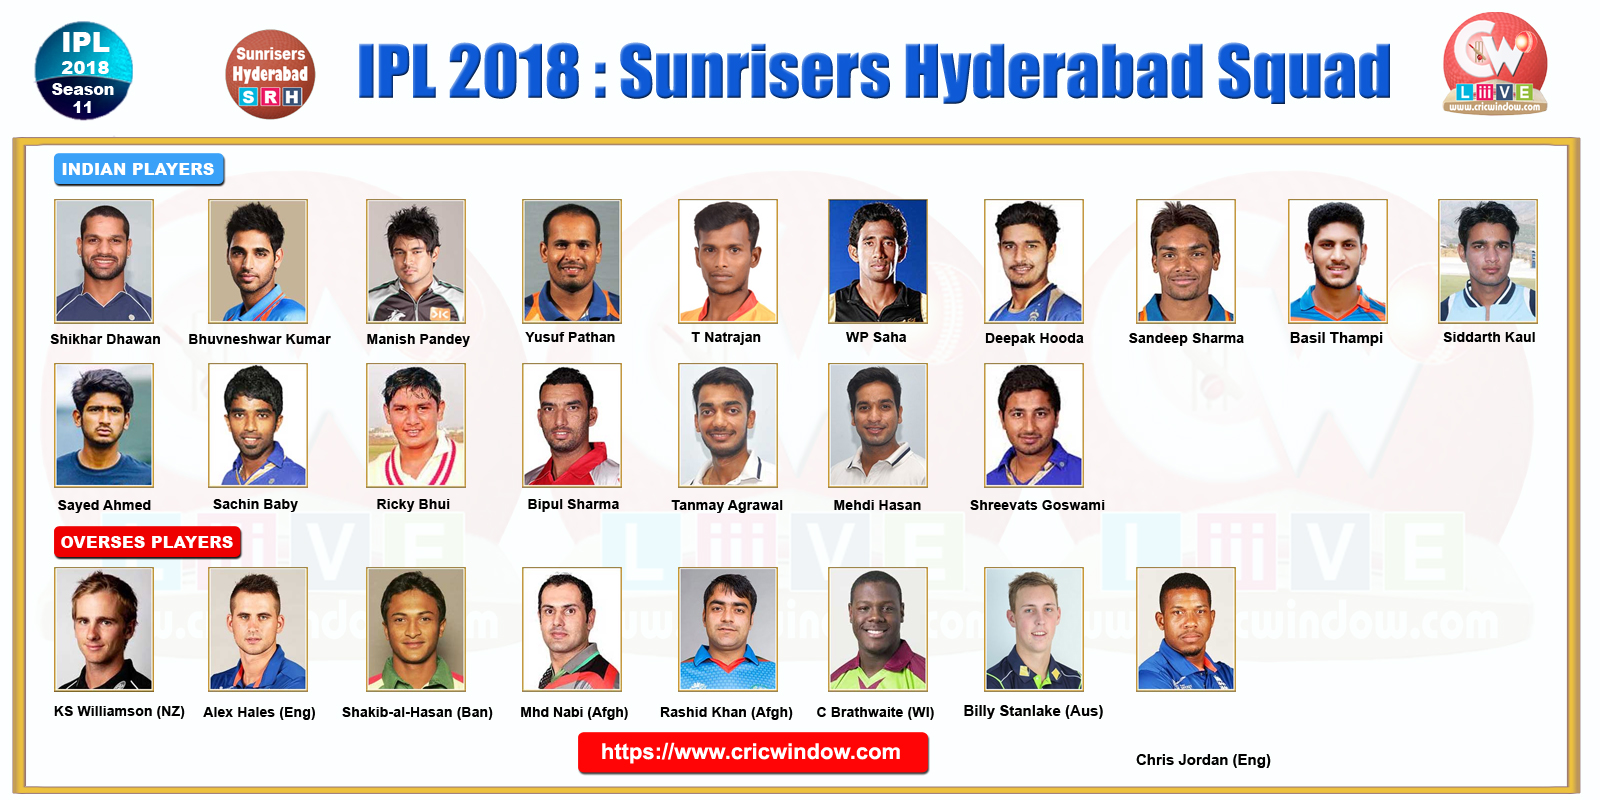 Sunrisers Hyderabad team 2018